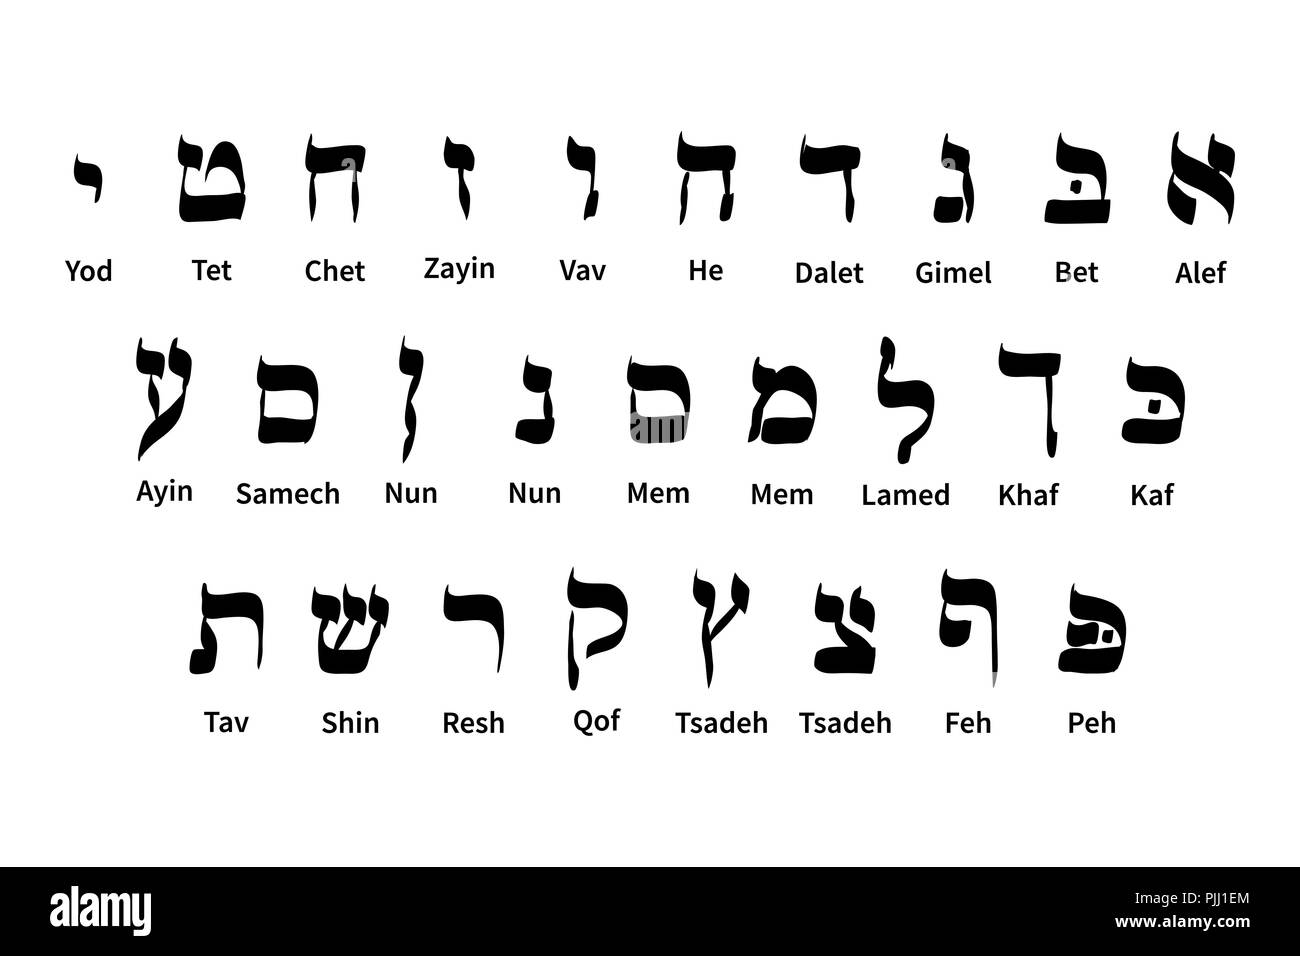 Hebrew Sign Language